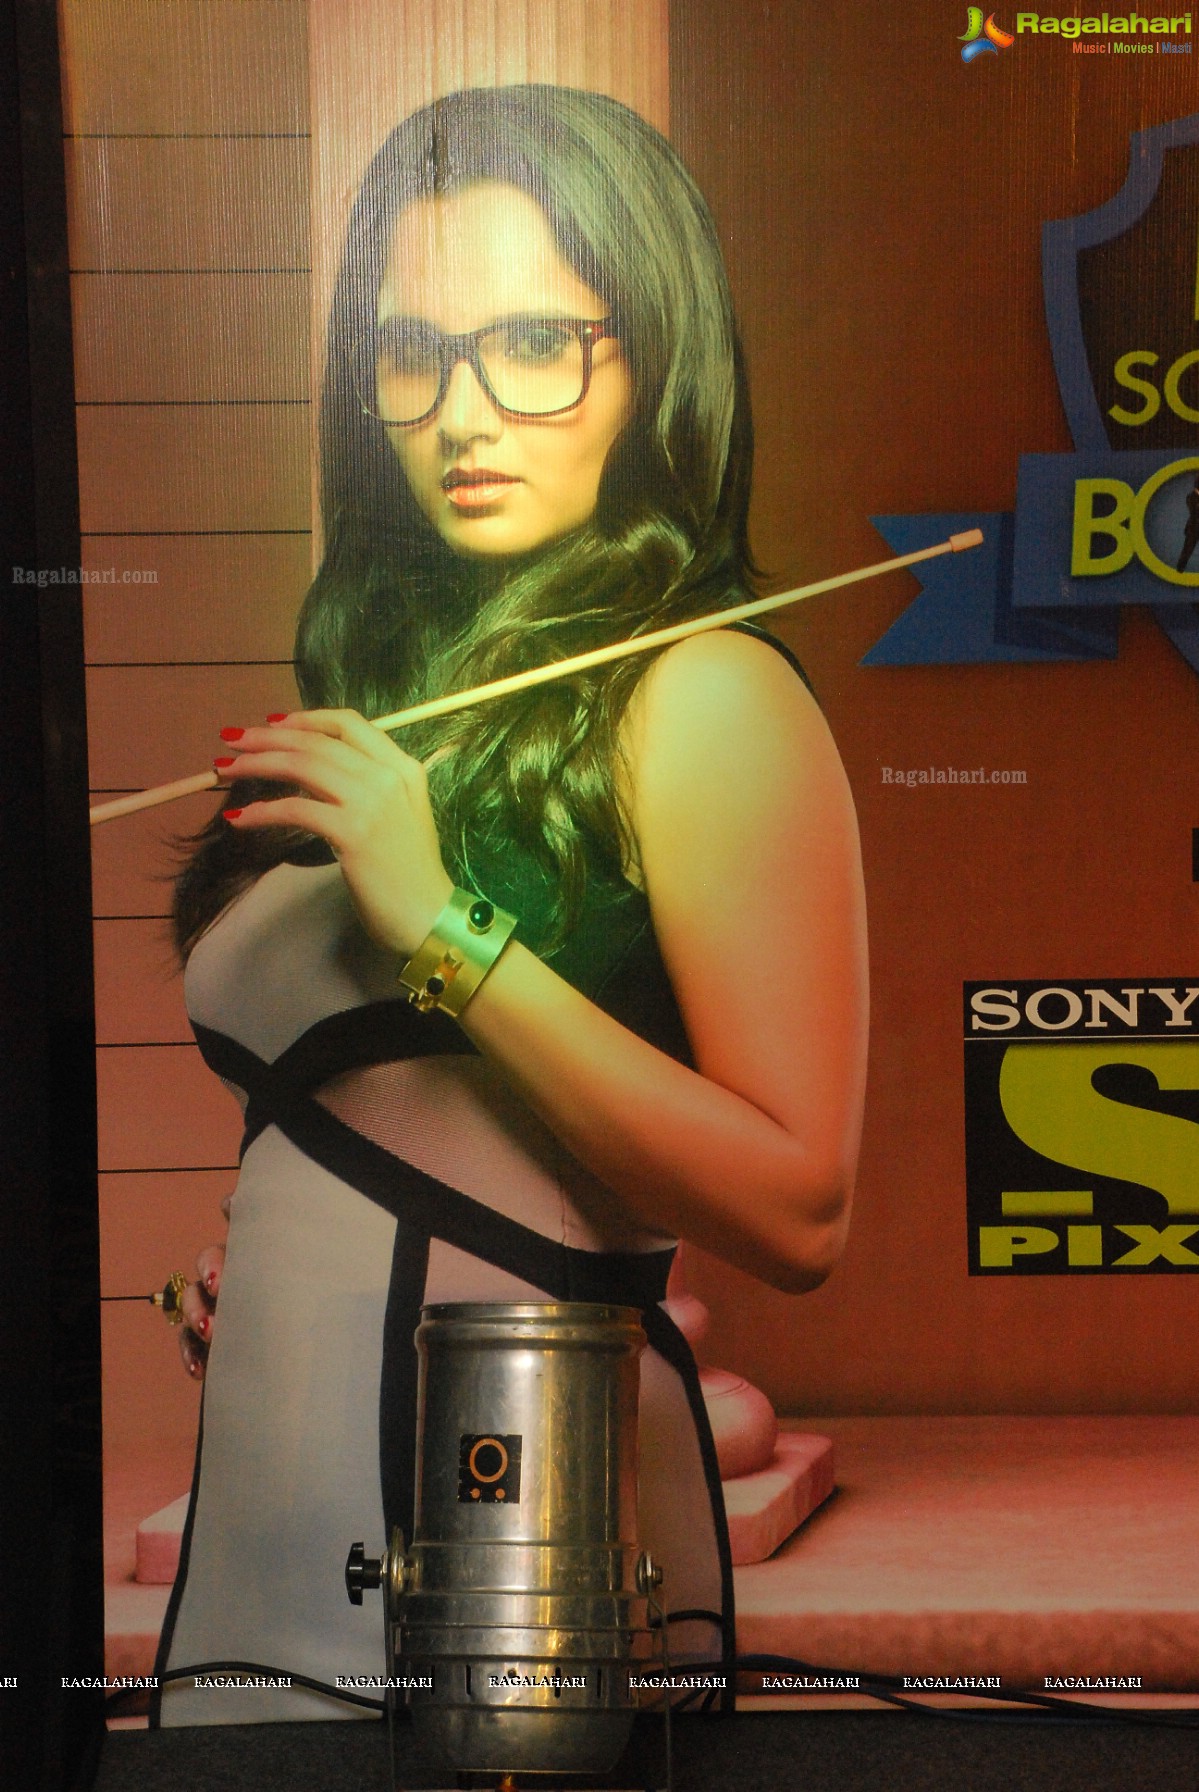 Sania Mirza at the 'PIX School of BONDing' - Press Meet by Sony Pix